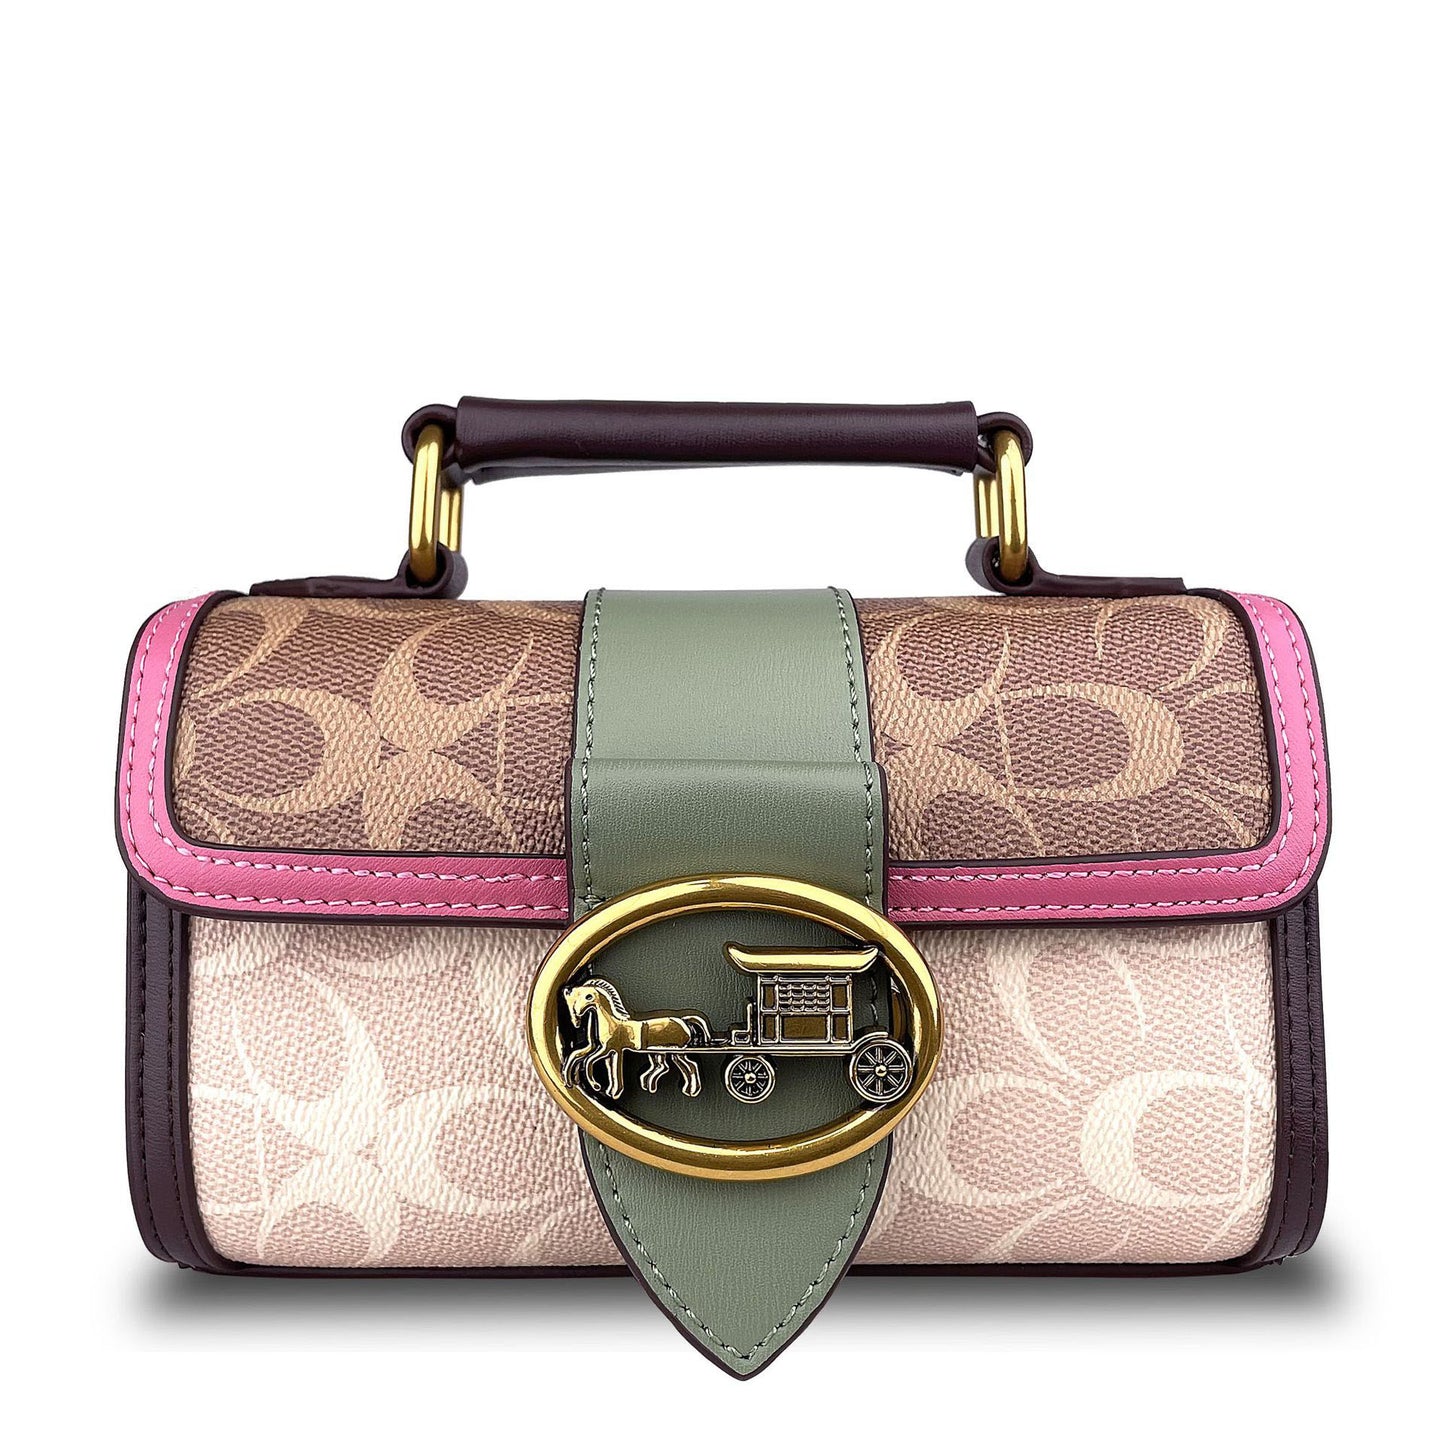 New simple and fashionable small handbag clash-color women's bag, chain, single shoulder bag, senior carriage bag